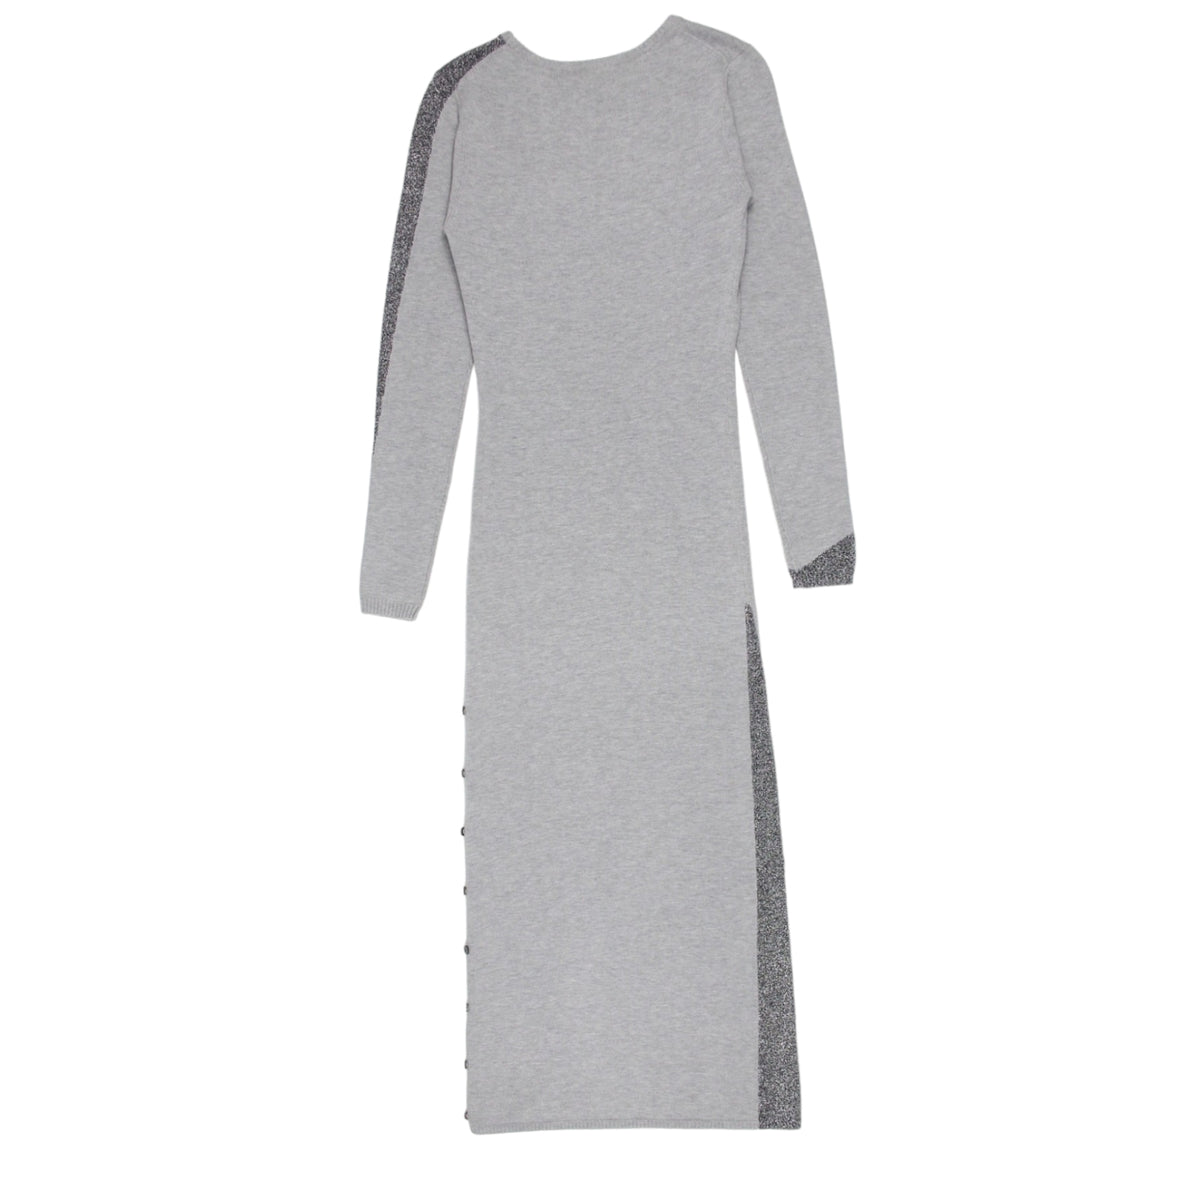 Bella Freud Grey/Metallic Knit Lightening Dress